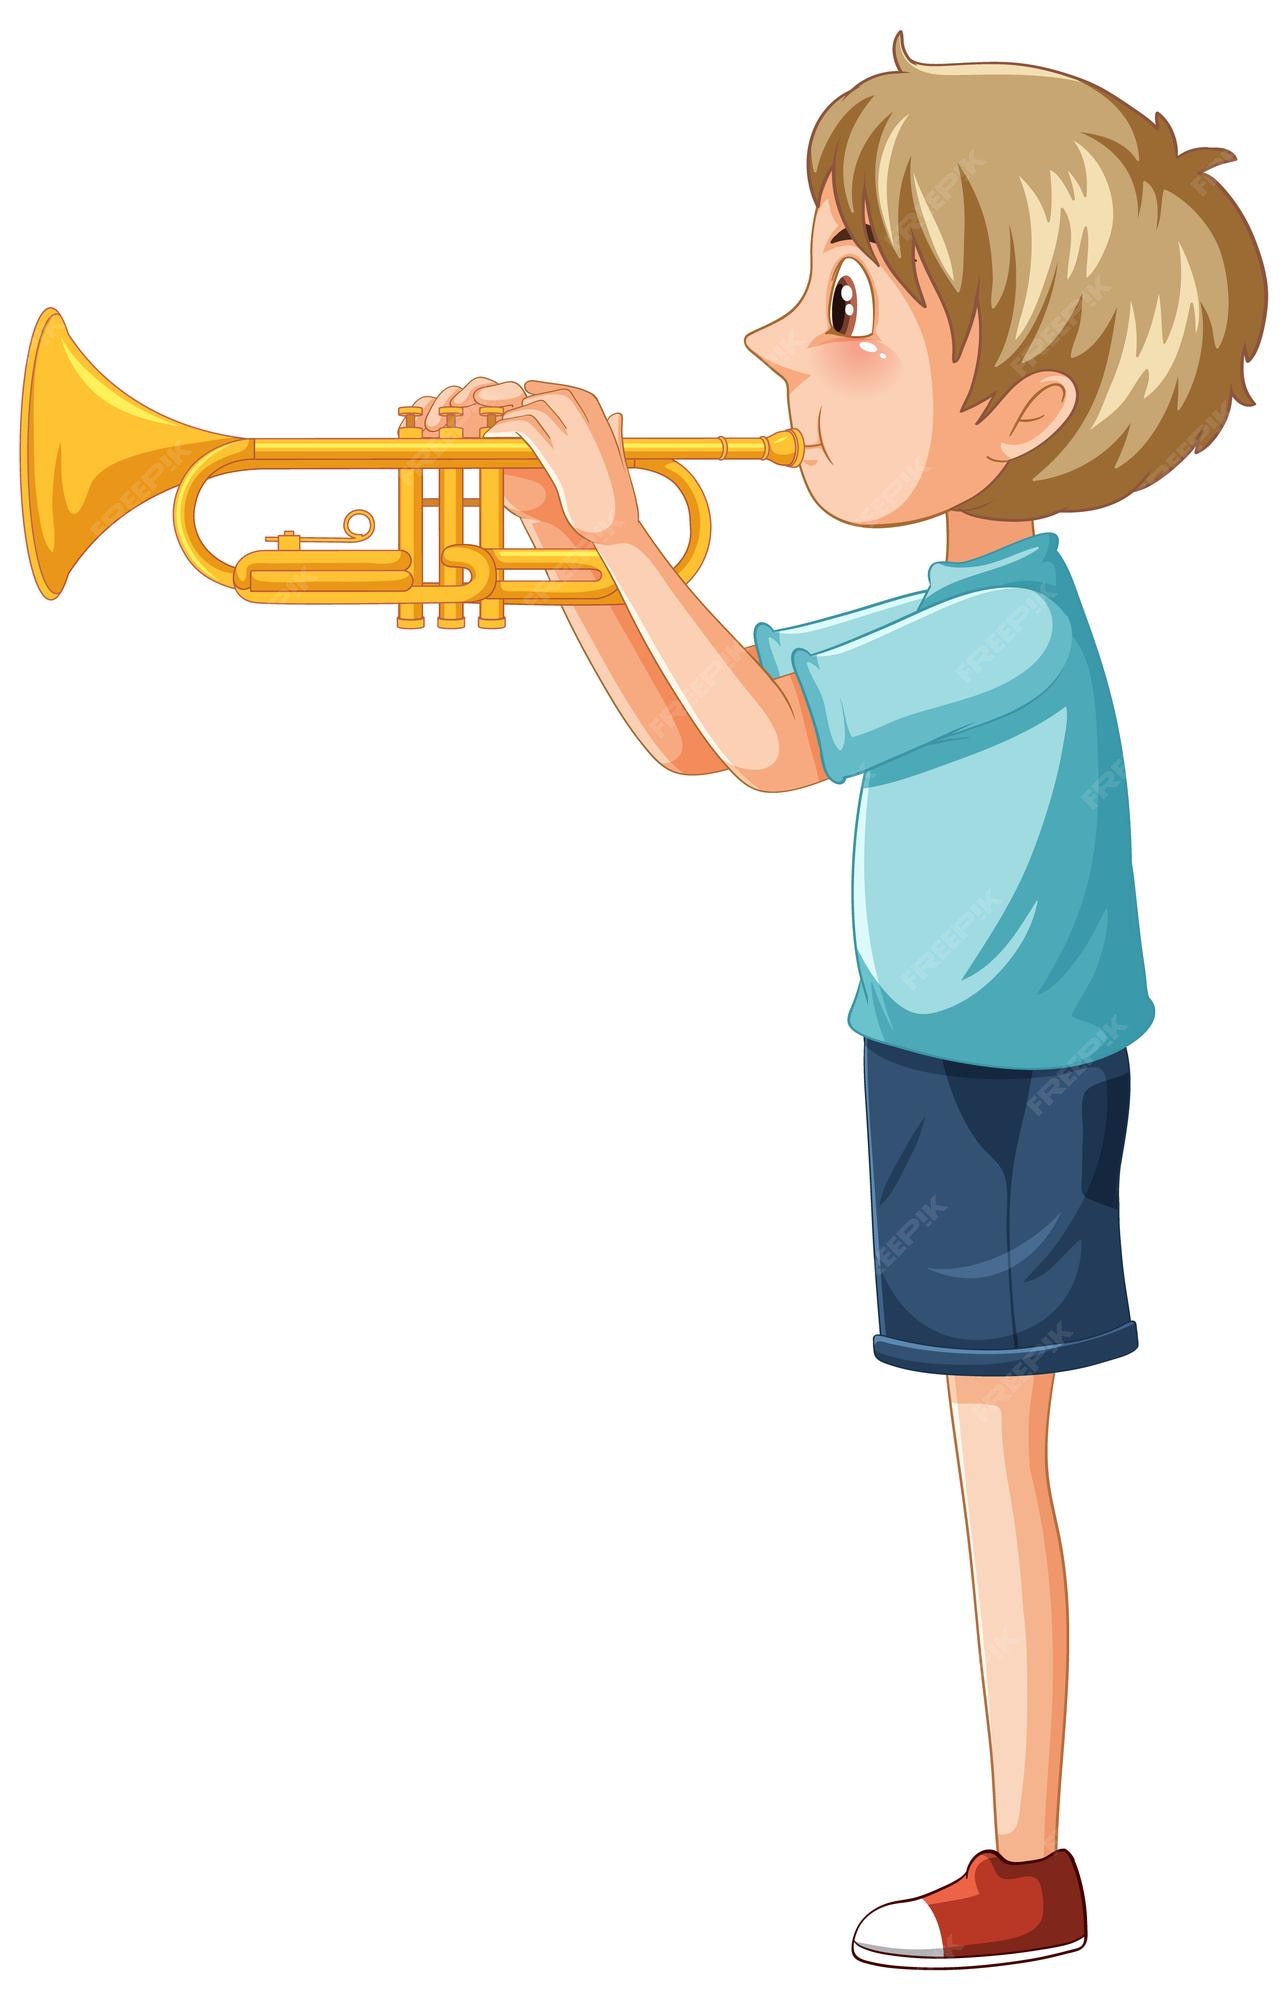 Cartoon Trumpet Images - Free Download on Freepik